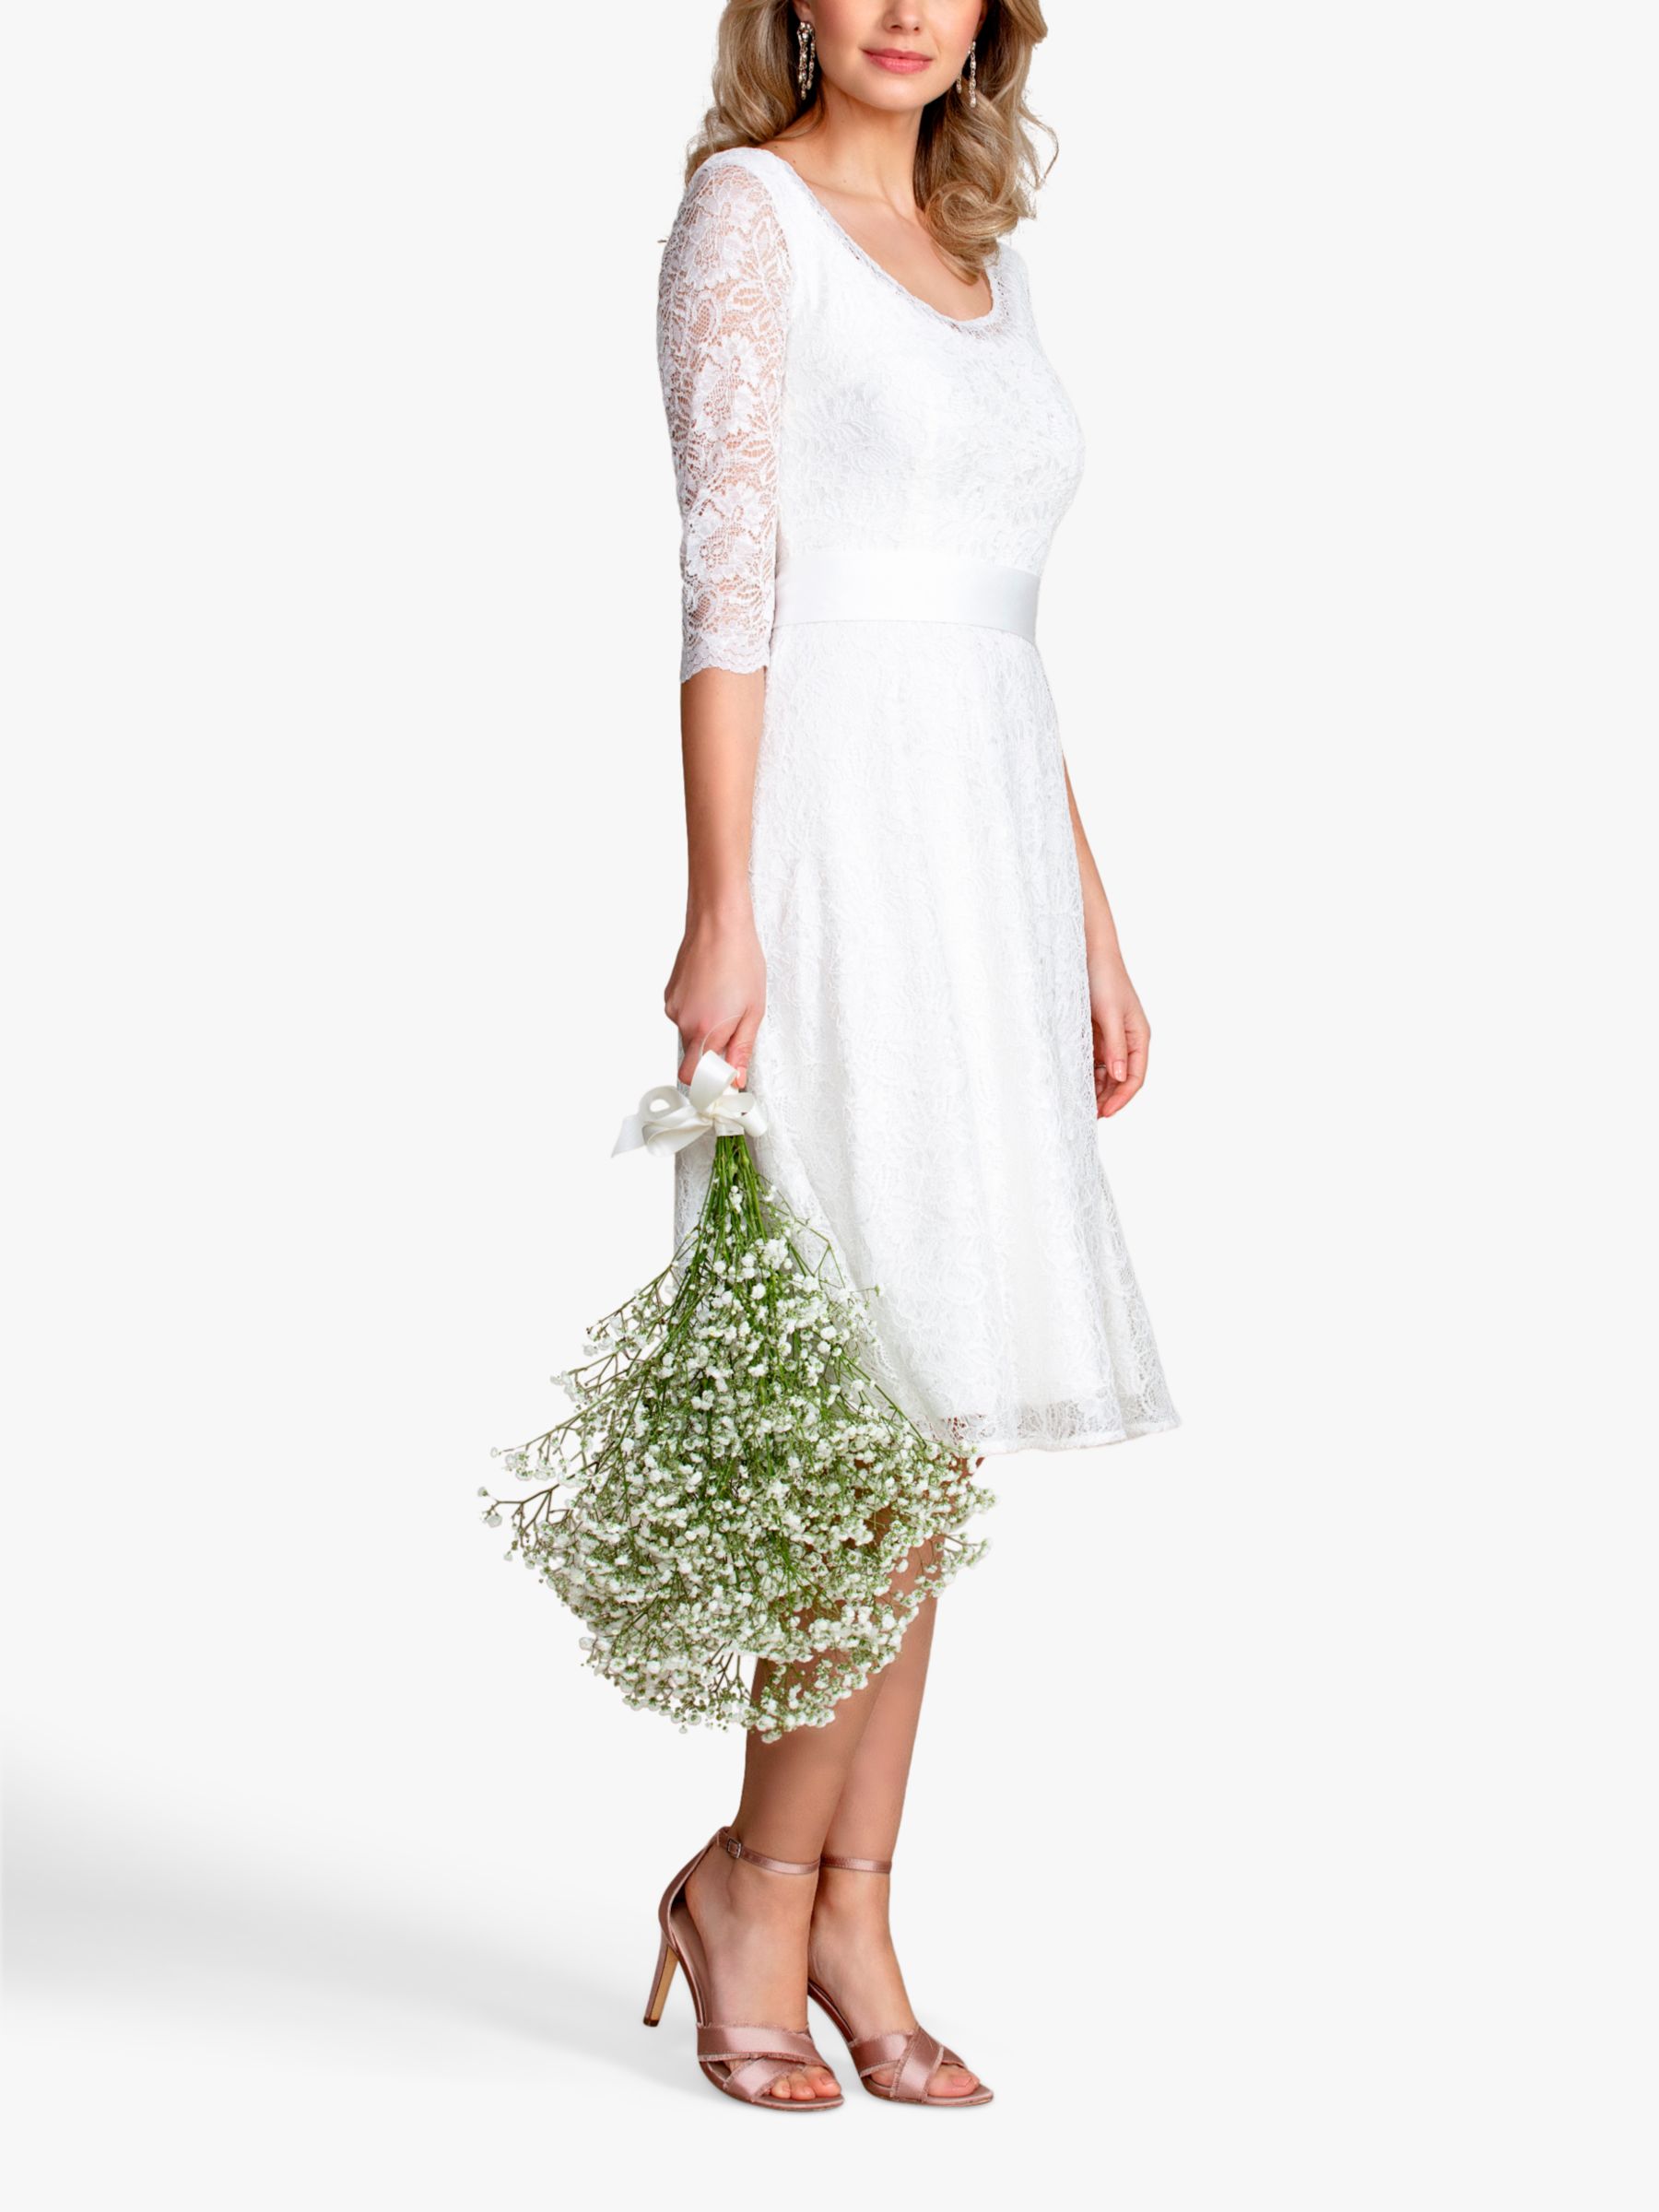 Alie Street Arabella Floral Lace Wedding Dress, Ivory, 6-8